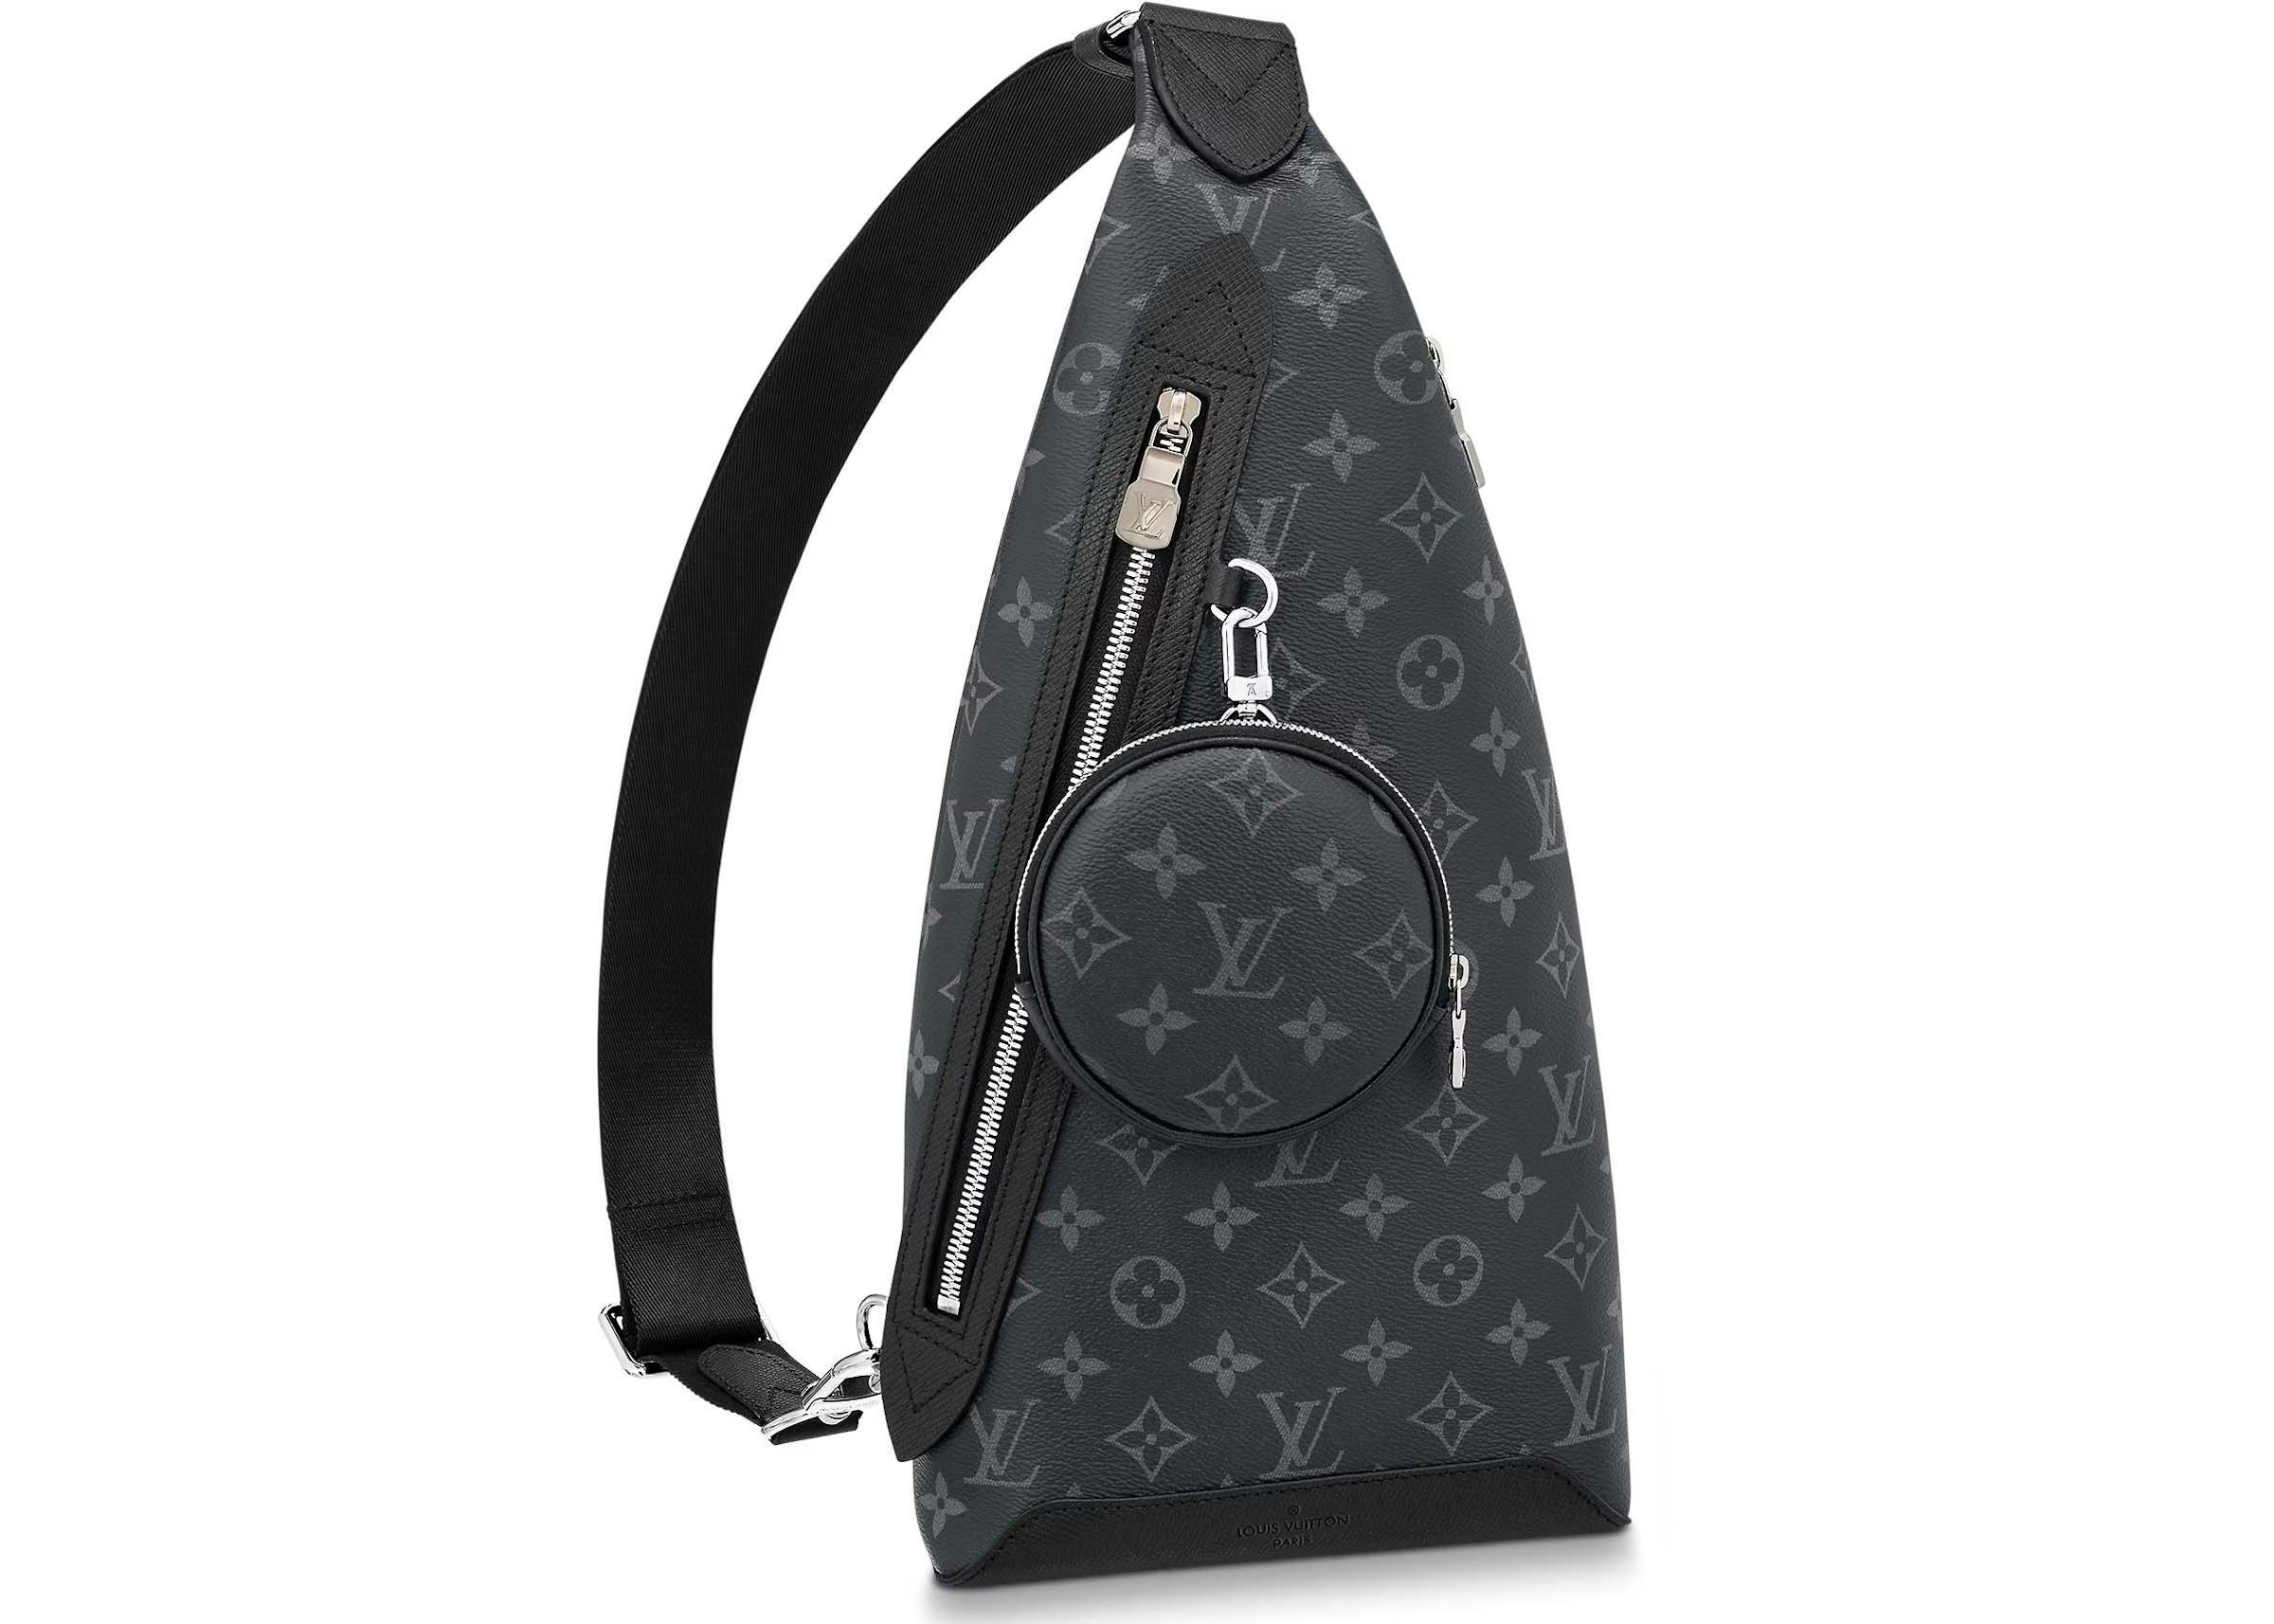 louis vuitton purse with black strap